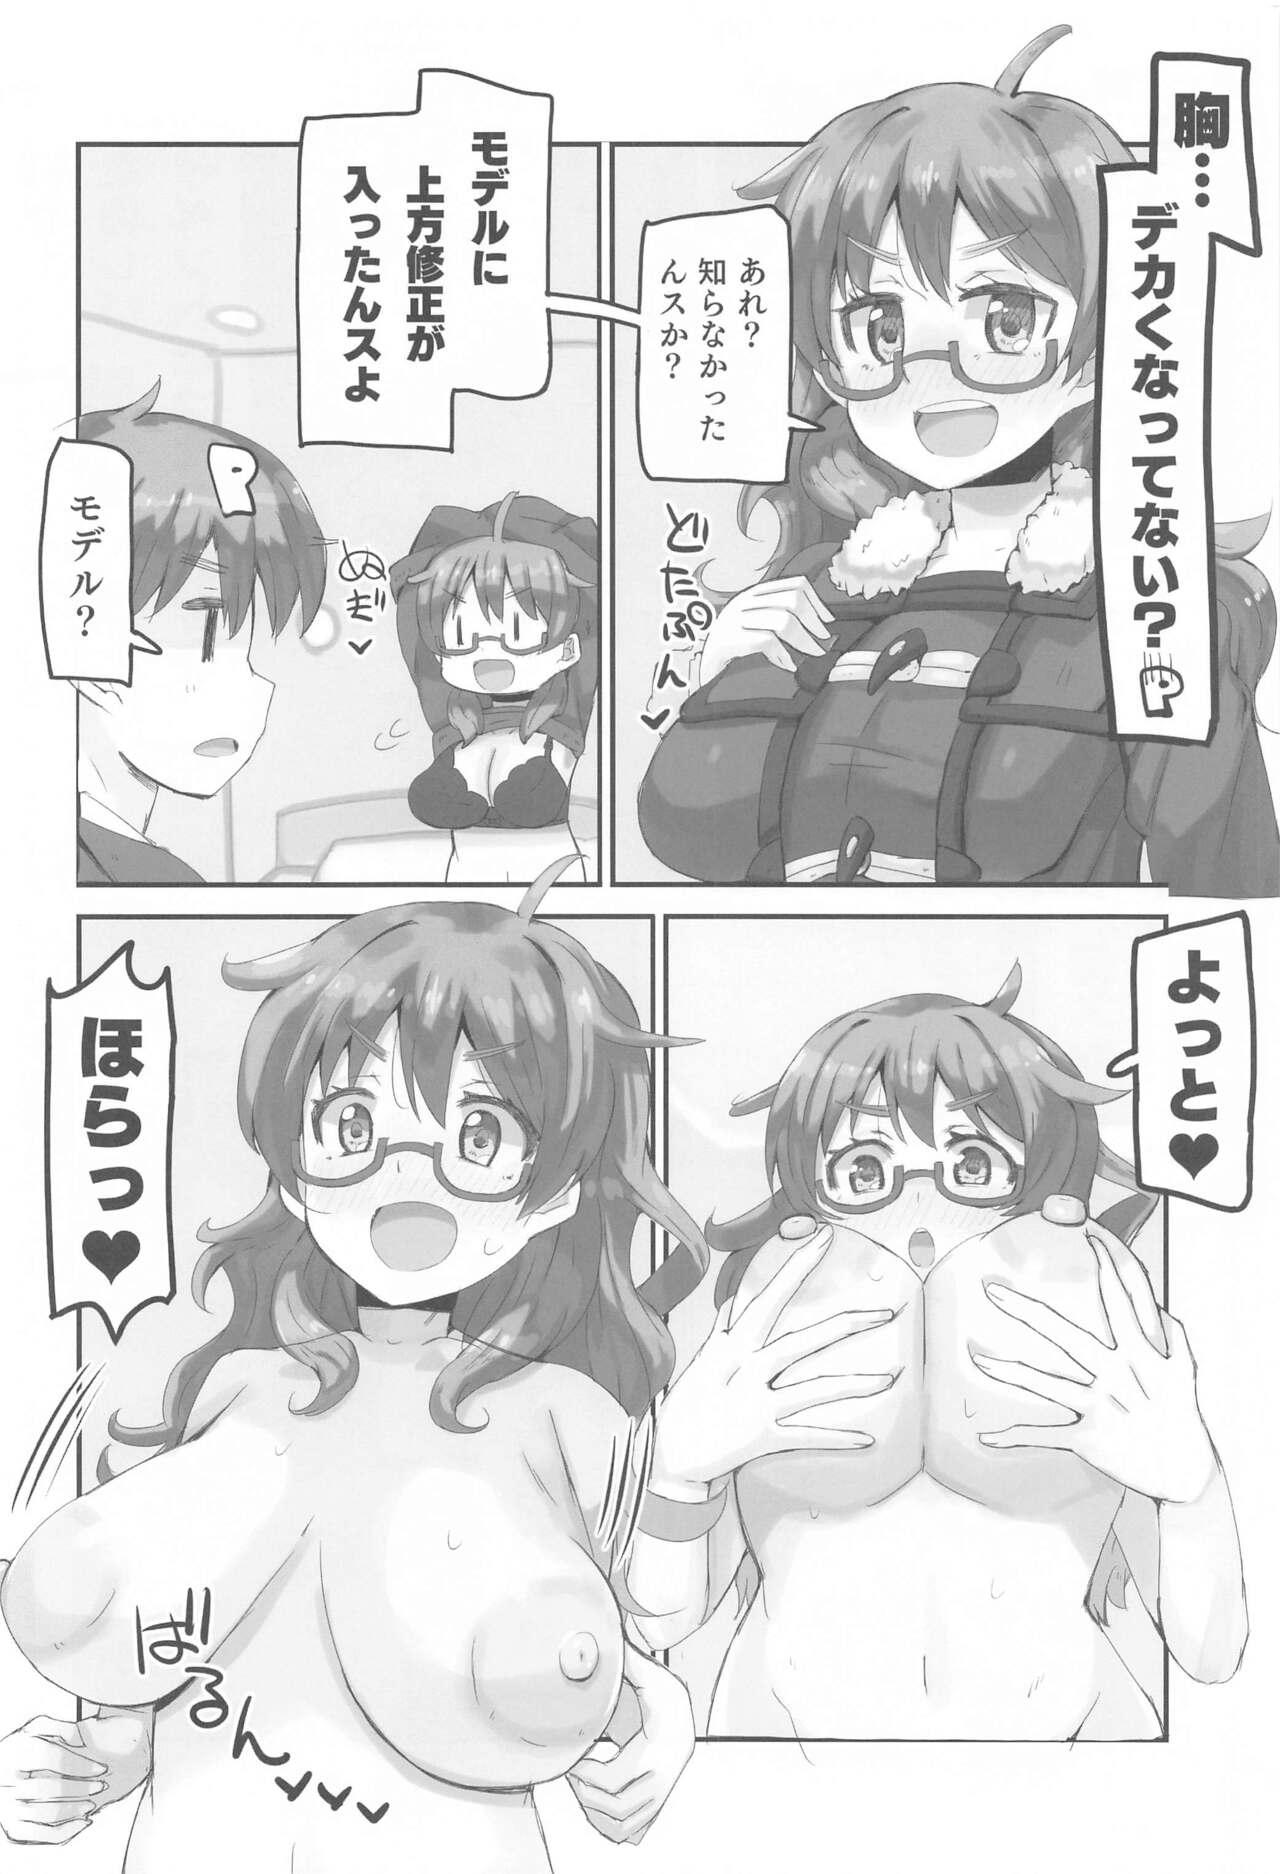 Hina no Oppai ga Dekkaku Natta!! - Hina's boobs have gotten bigger! 4